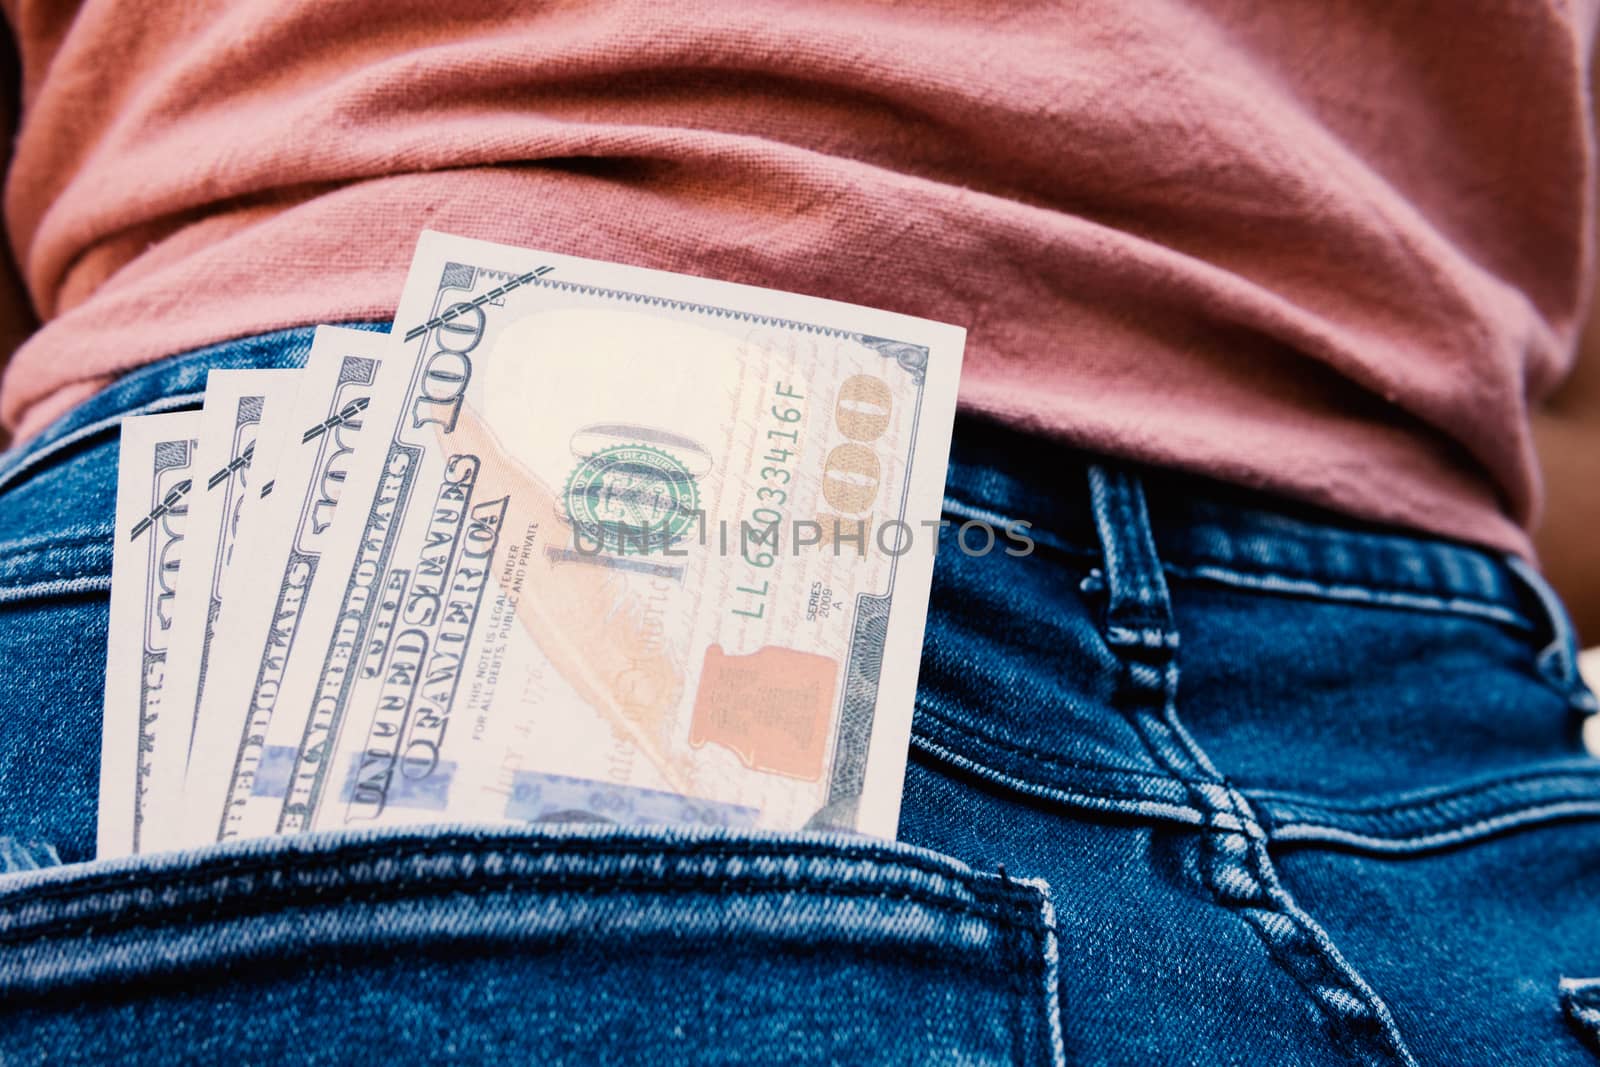 100 banknotes in a woman's rear jean pocket by somesense